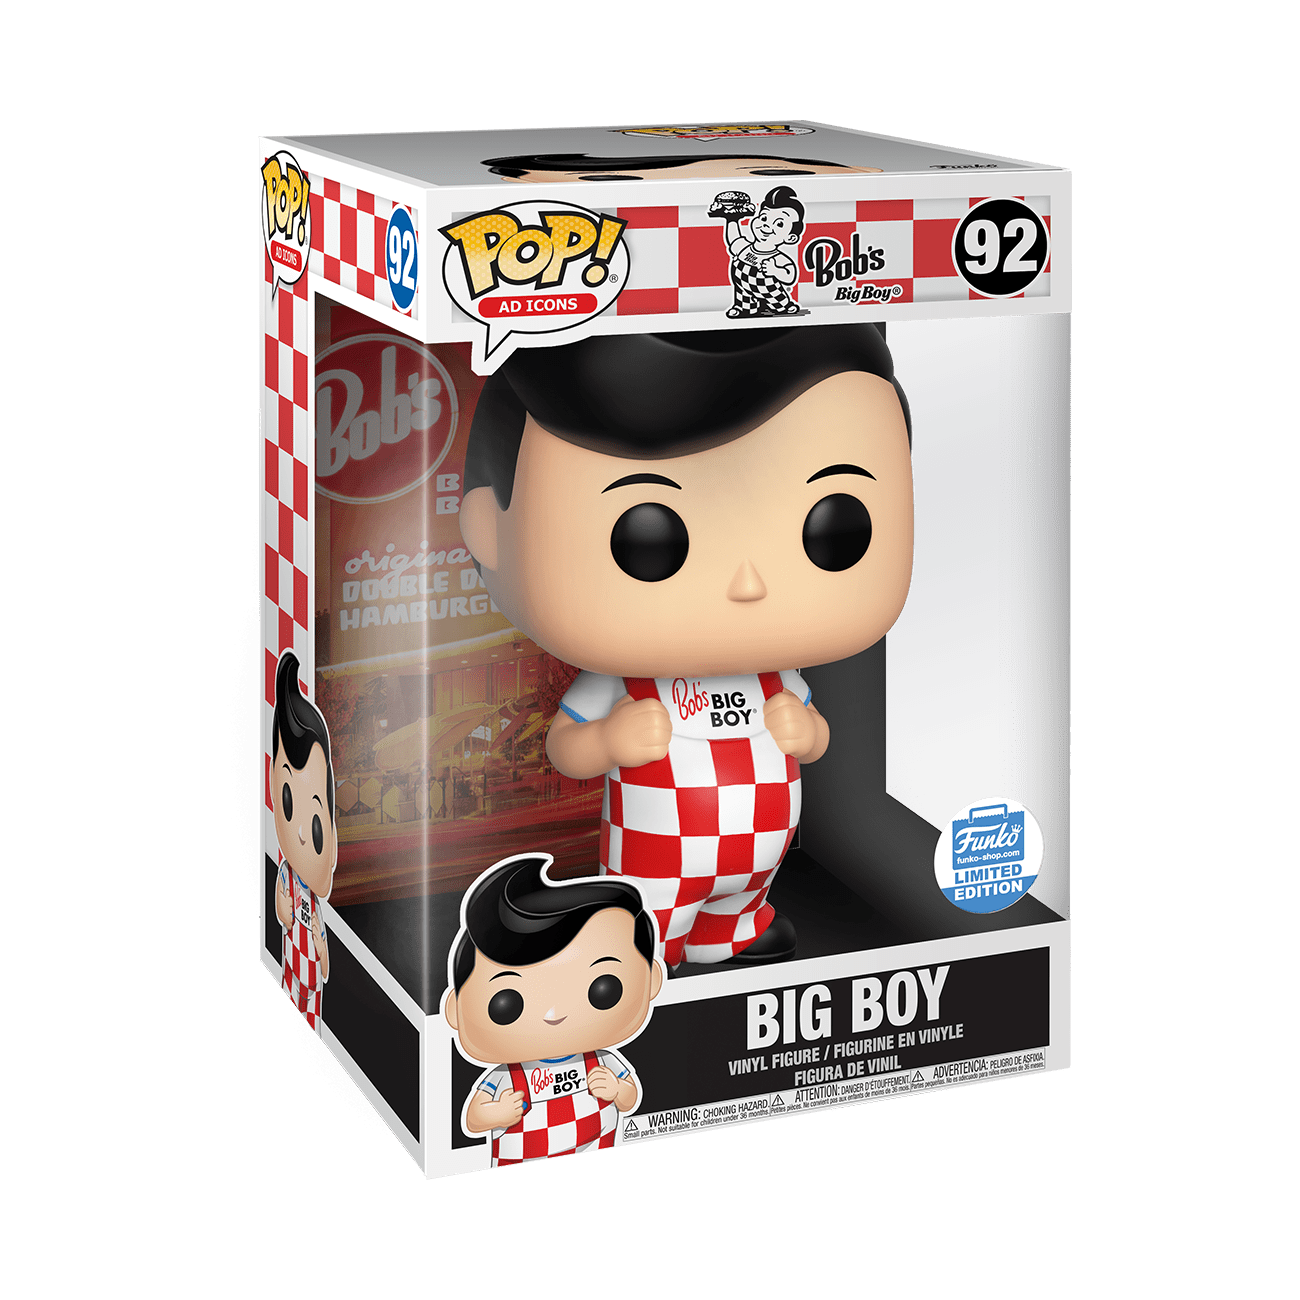 Big Boy (10-Inch) Pop Vinyl Pop Ad Icons